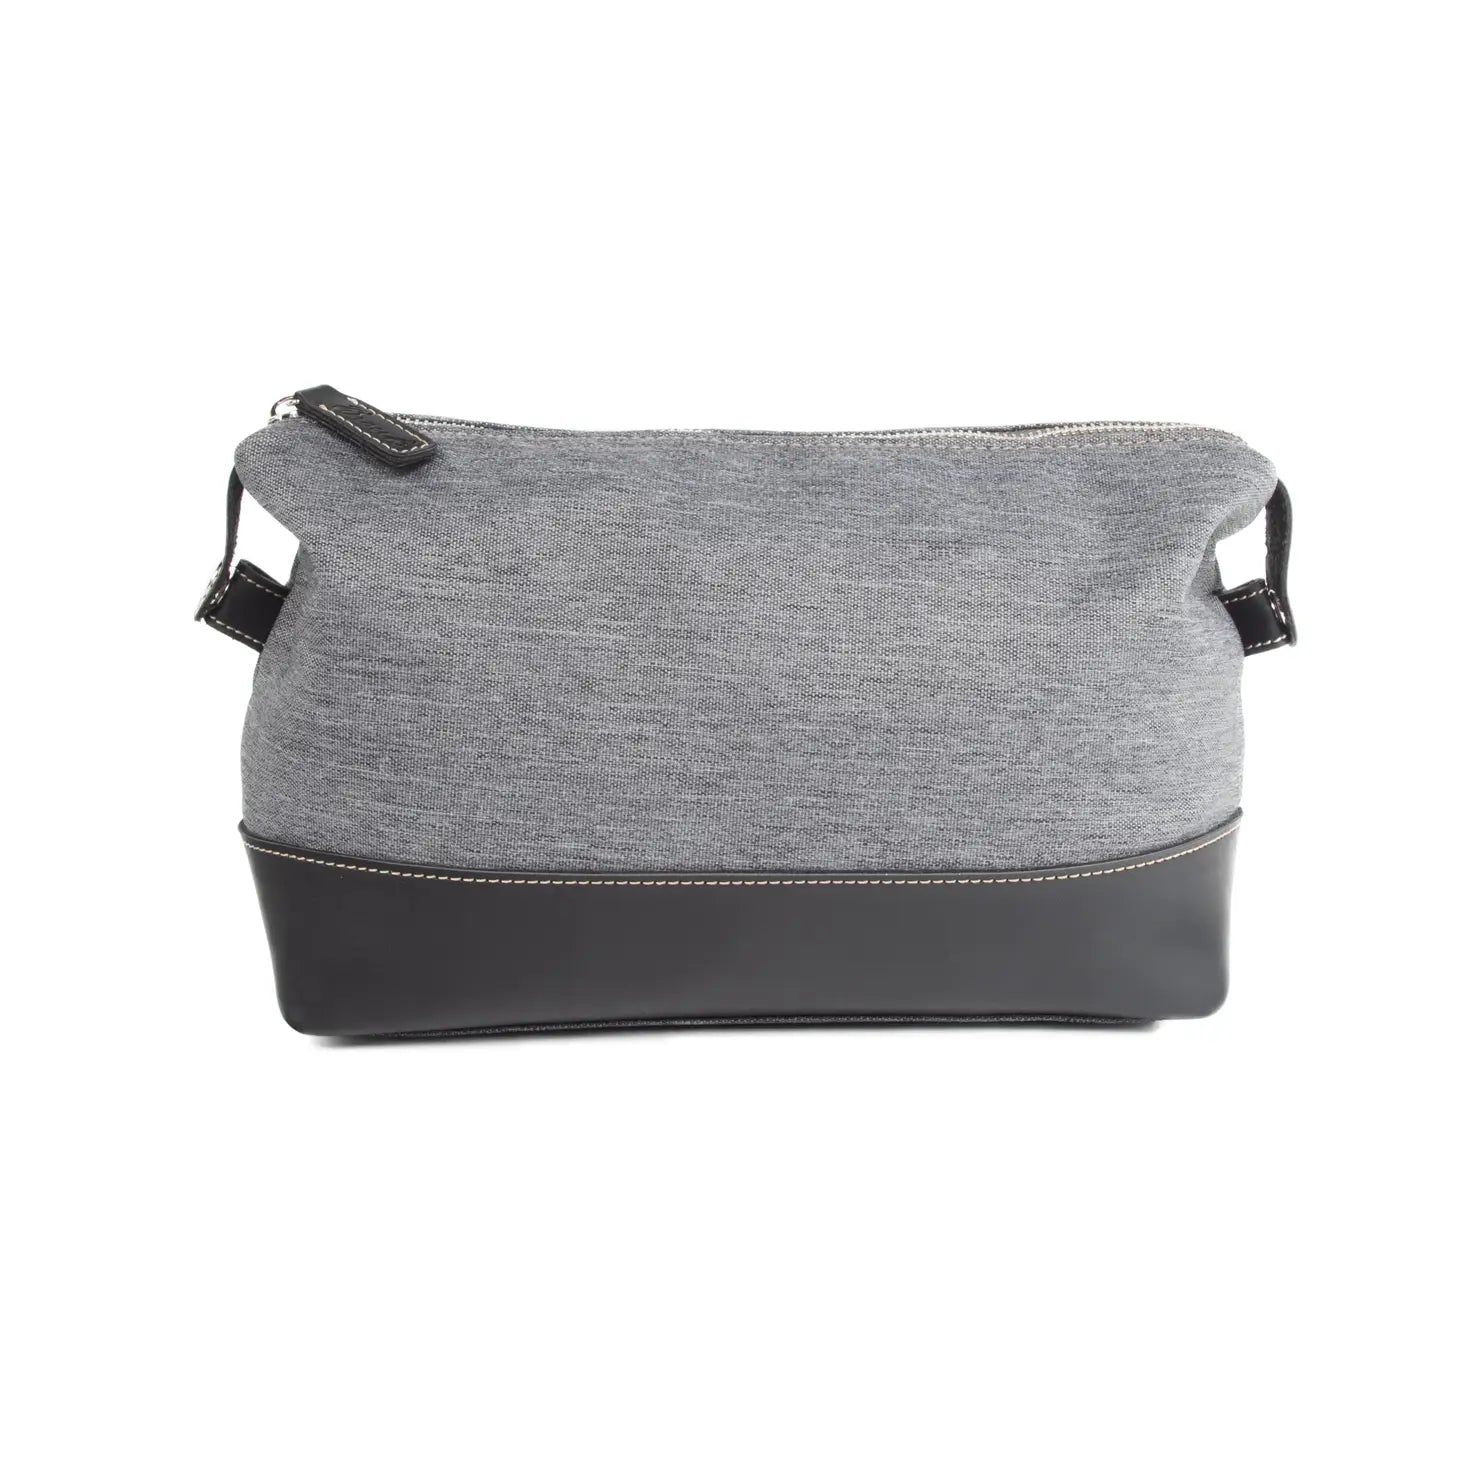 Personalized Getaway Toiletry Bag (Grey)